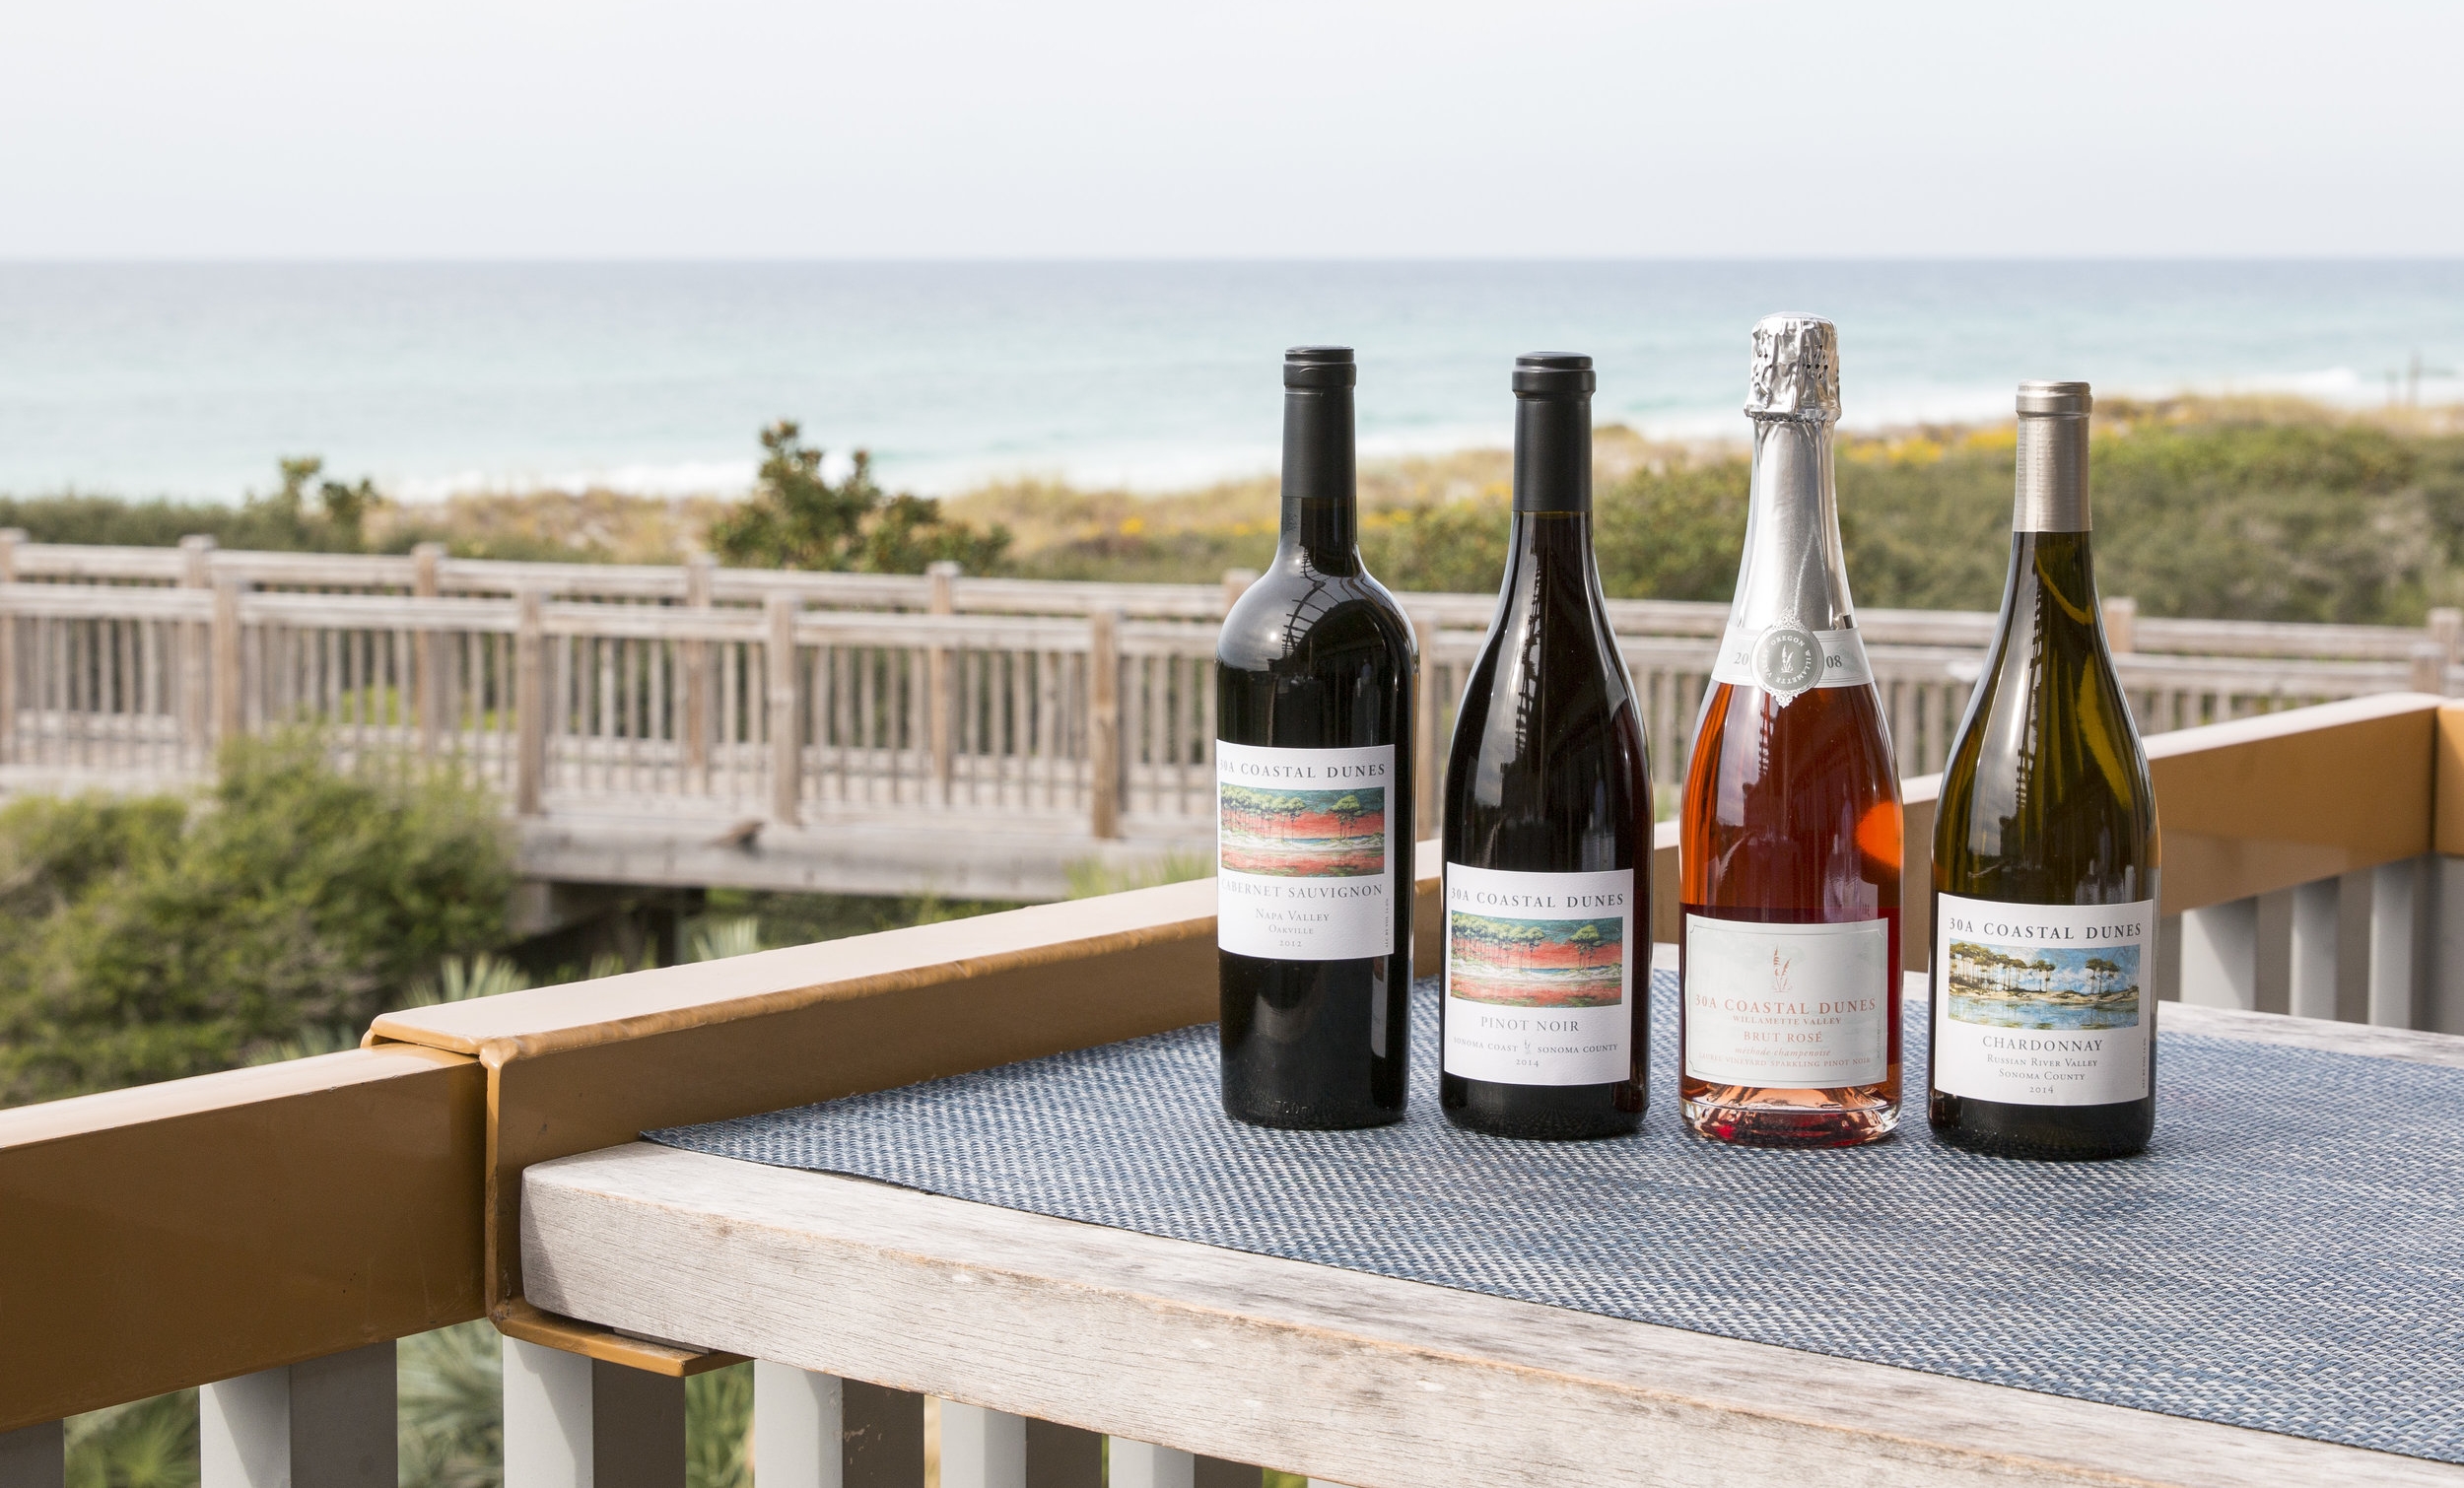 30A Coastal Dunes Wine Company